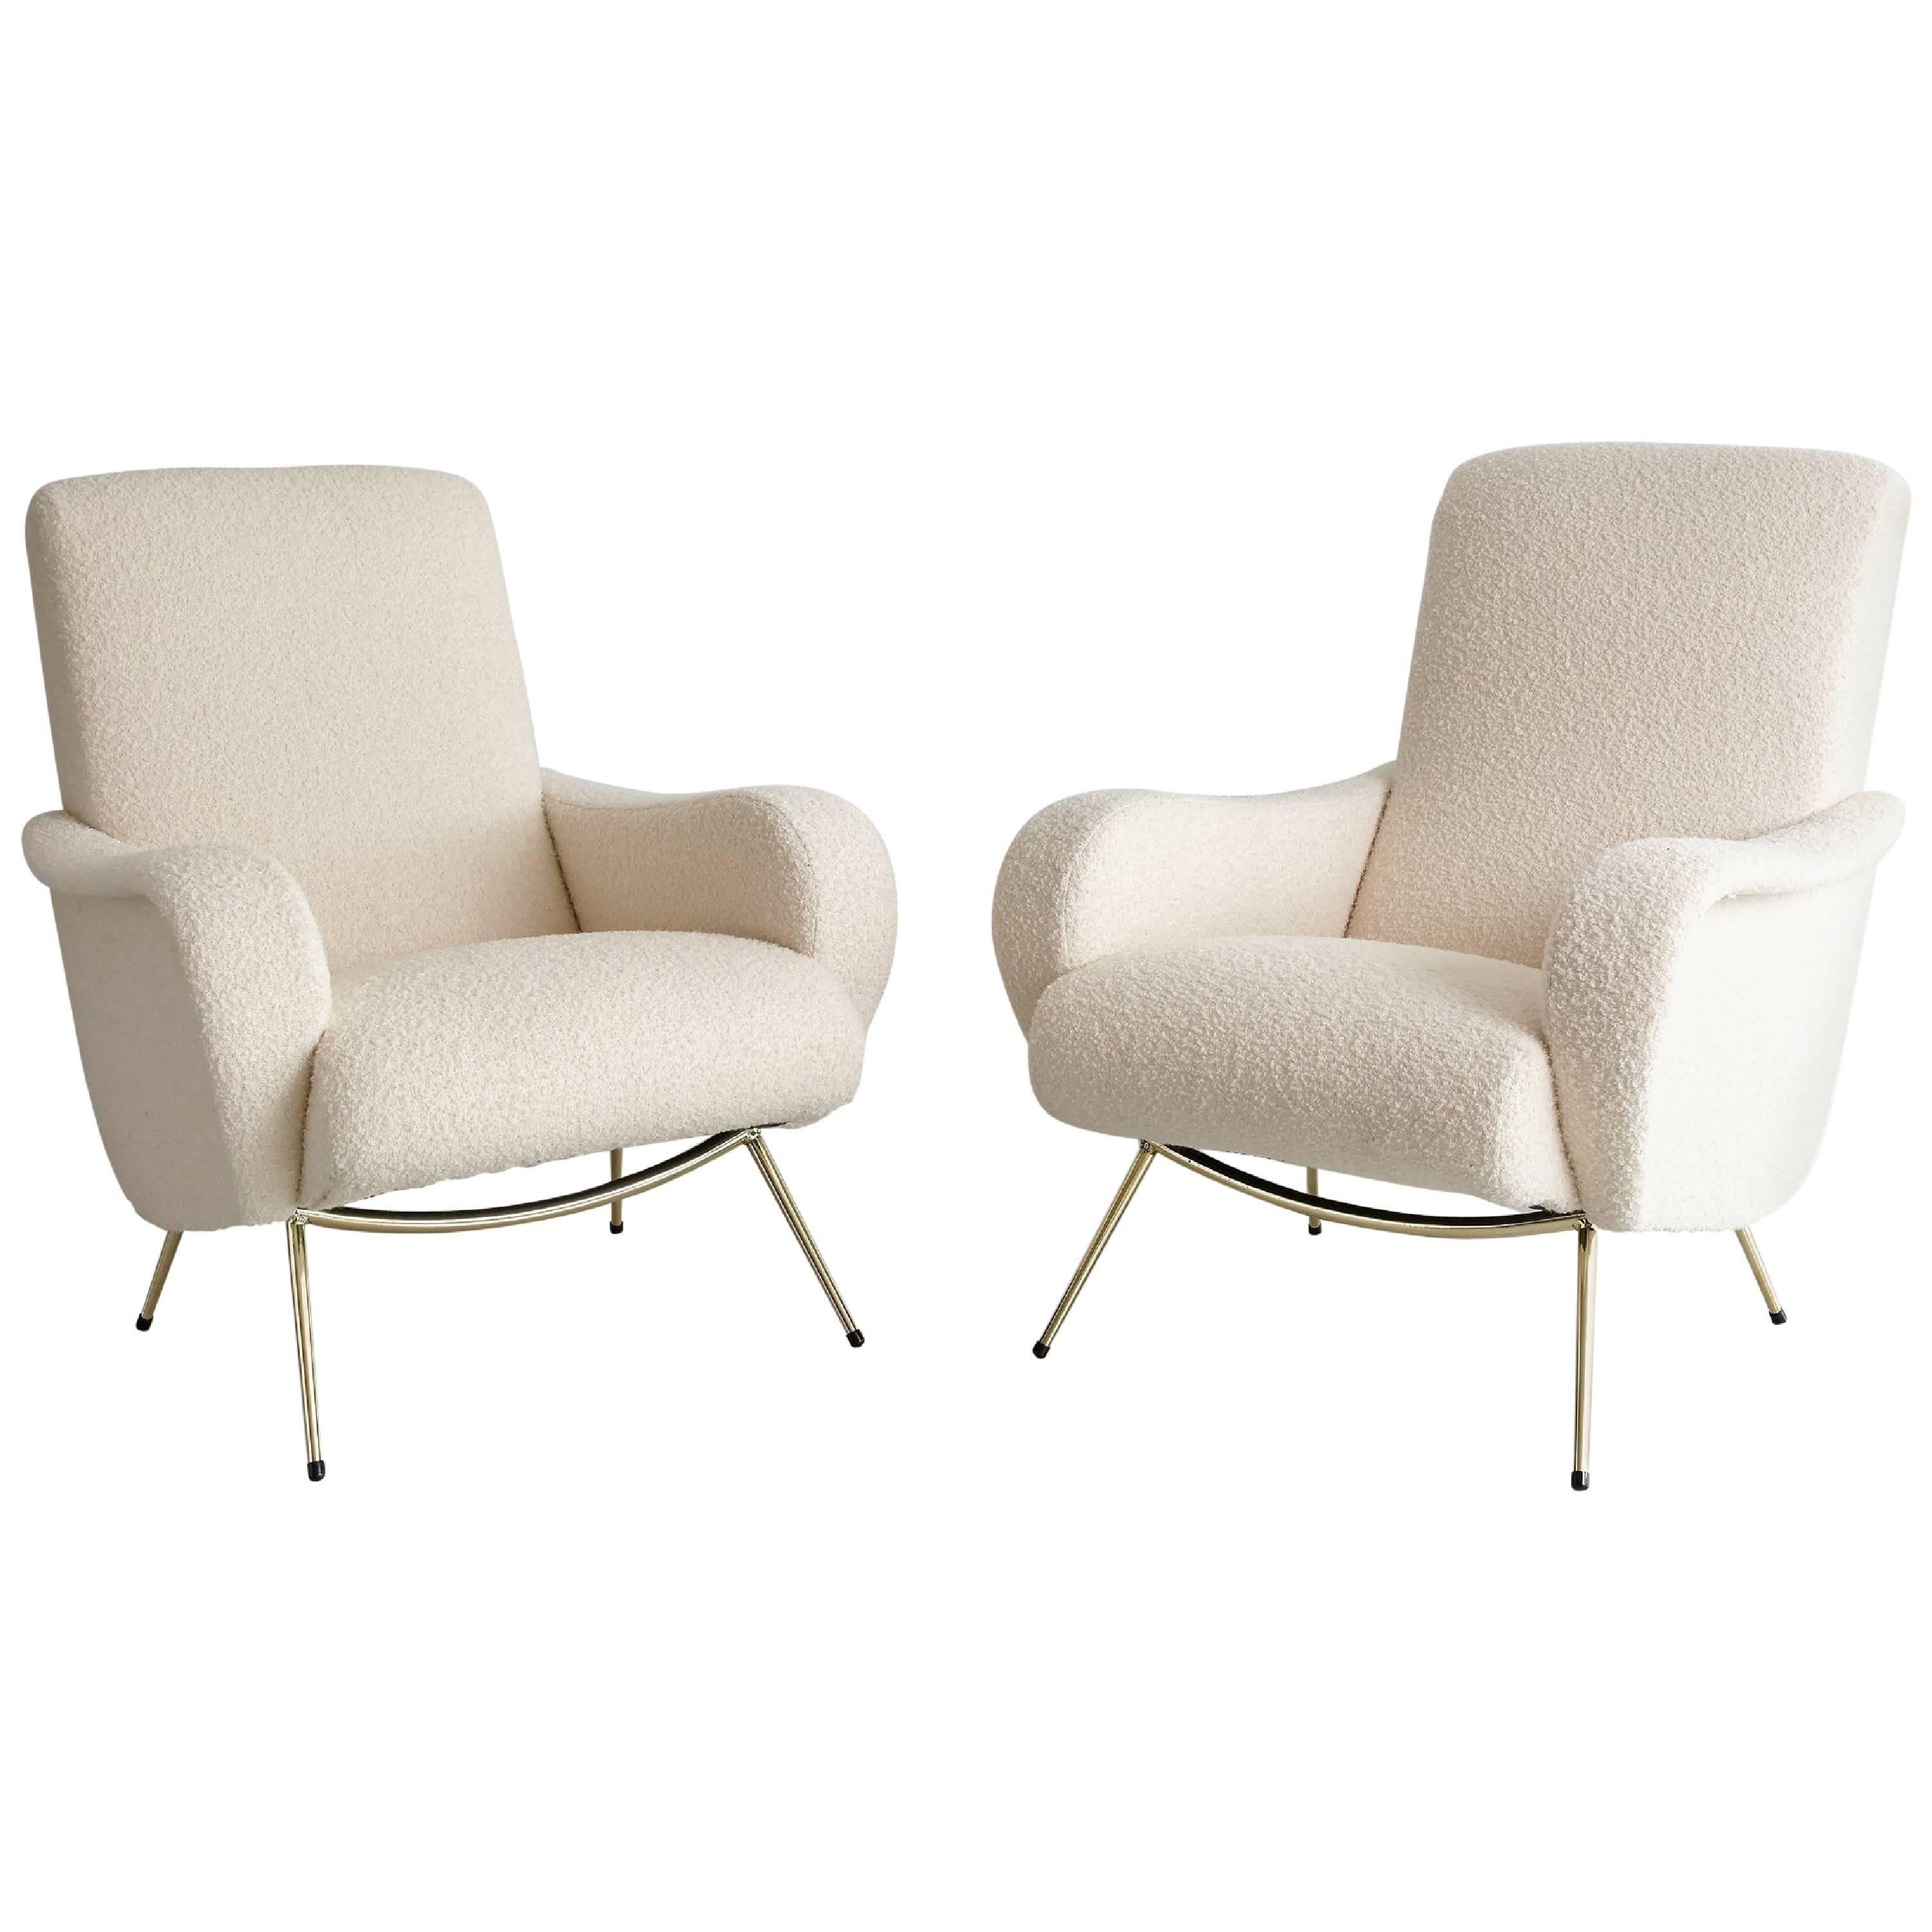 Pair of Italian Marco Zanuso Style Lounge Chairs in Wool Bouclé